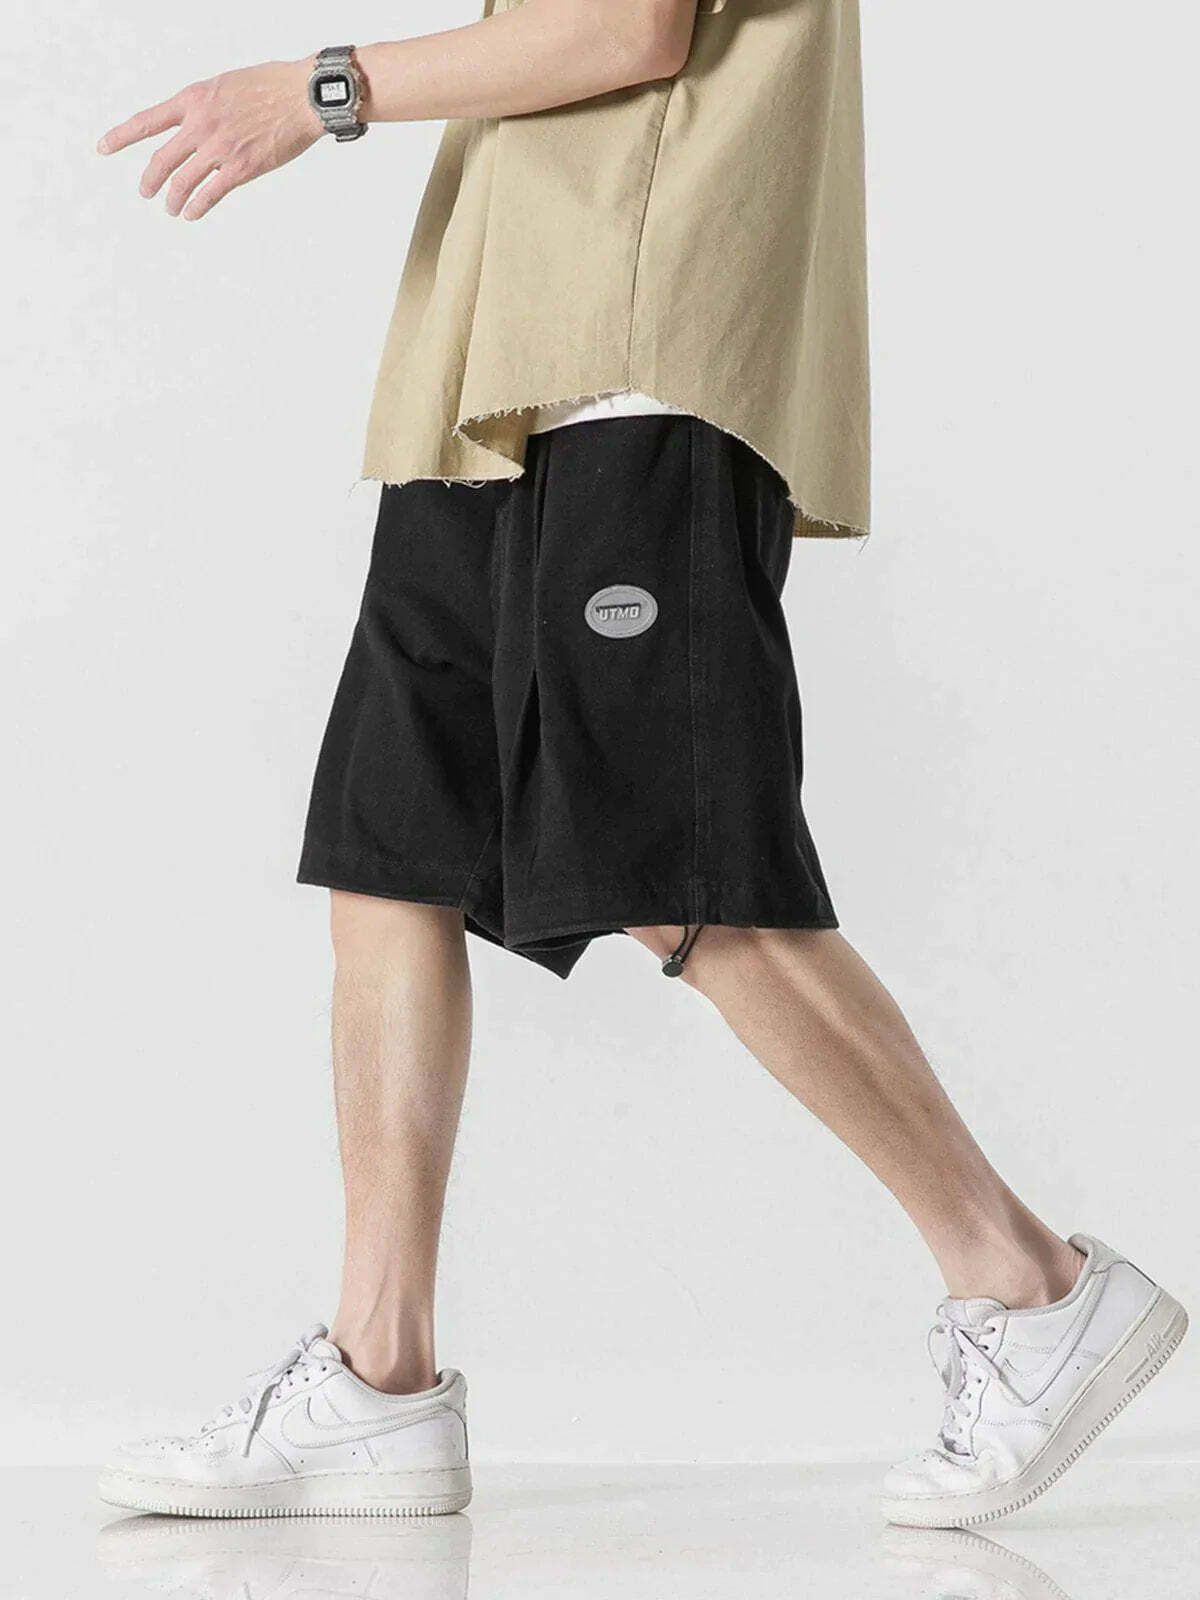 drawstring label shorts edgy urban streetwear 2557